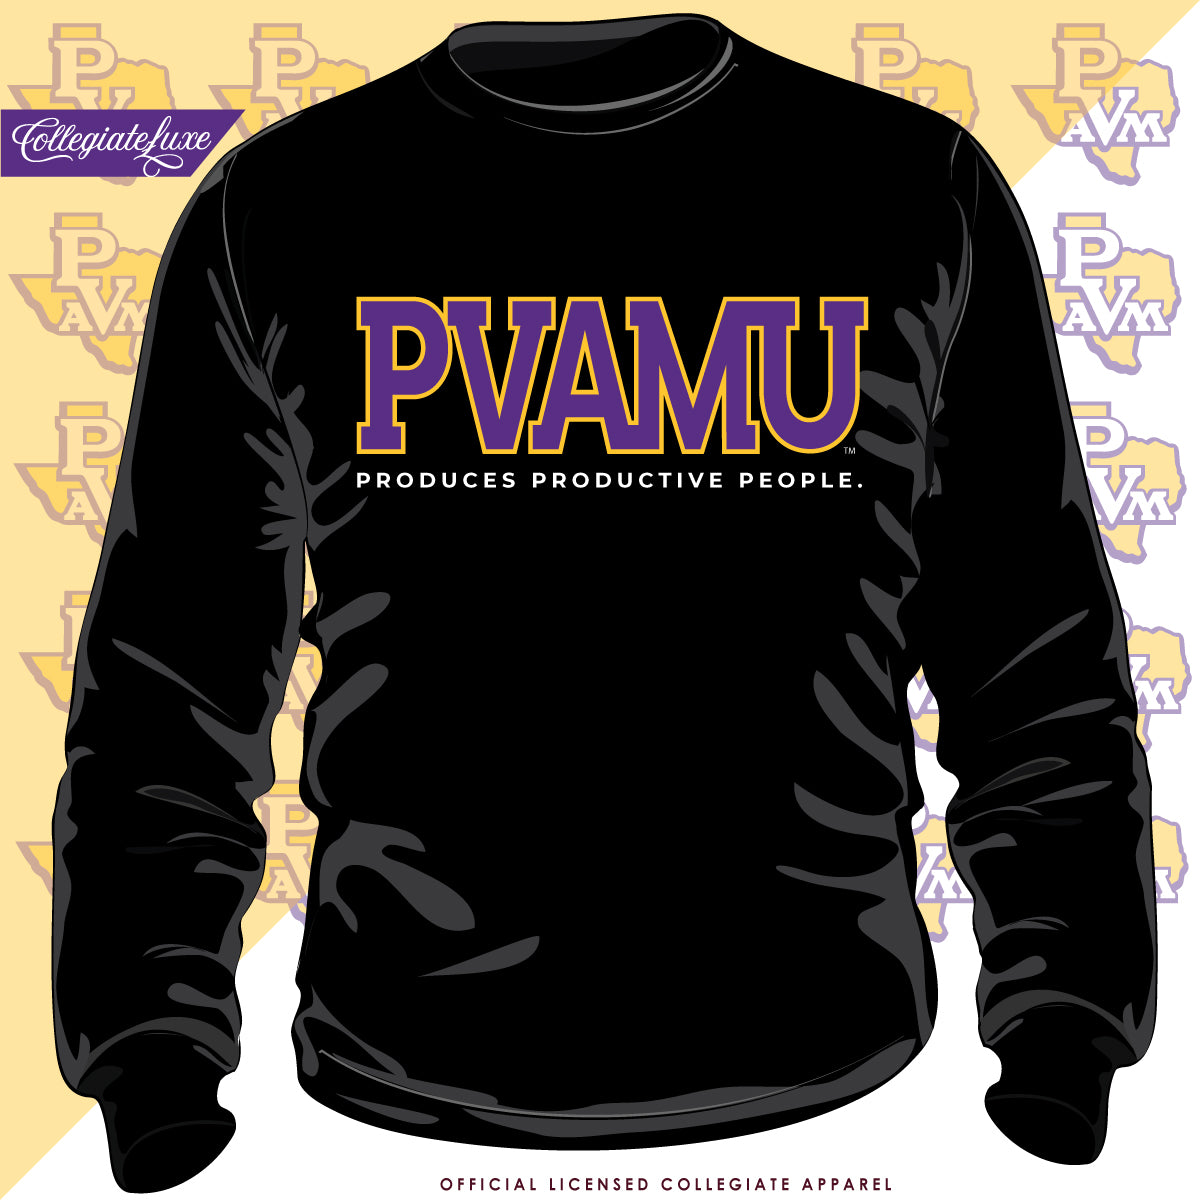 Prairie View A&M | 1900 Univ. BLACK Unisex Sweatshirt (N